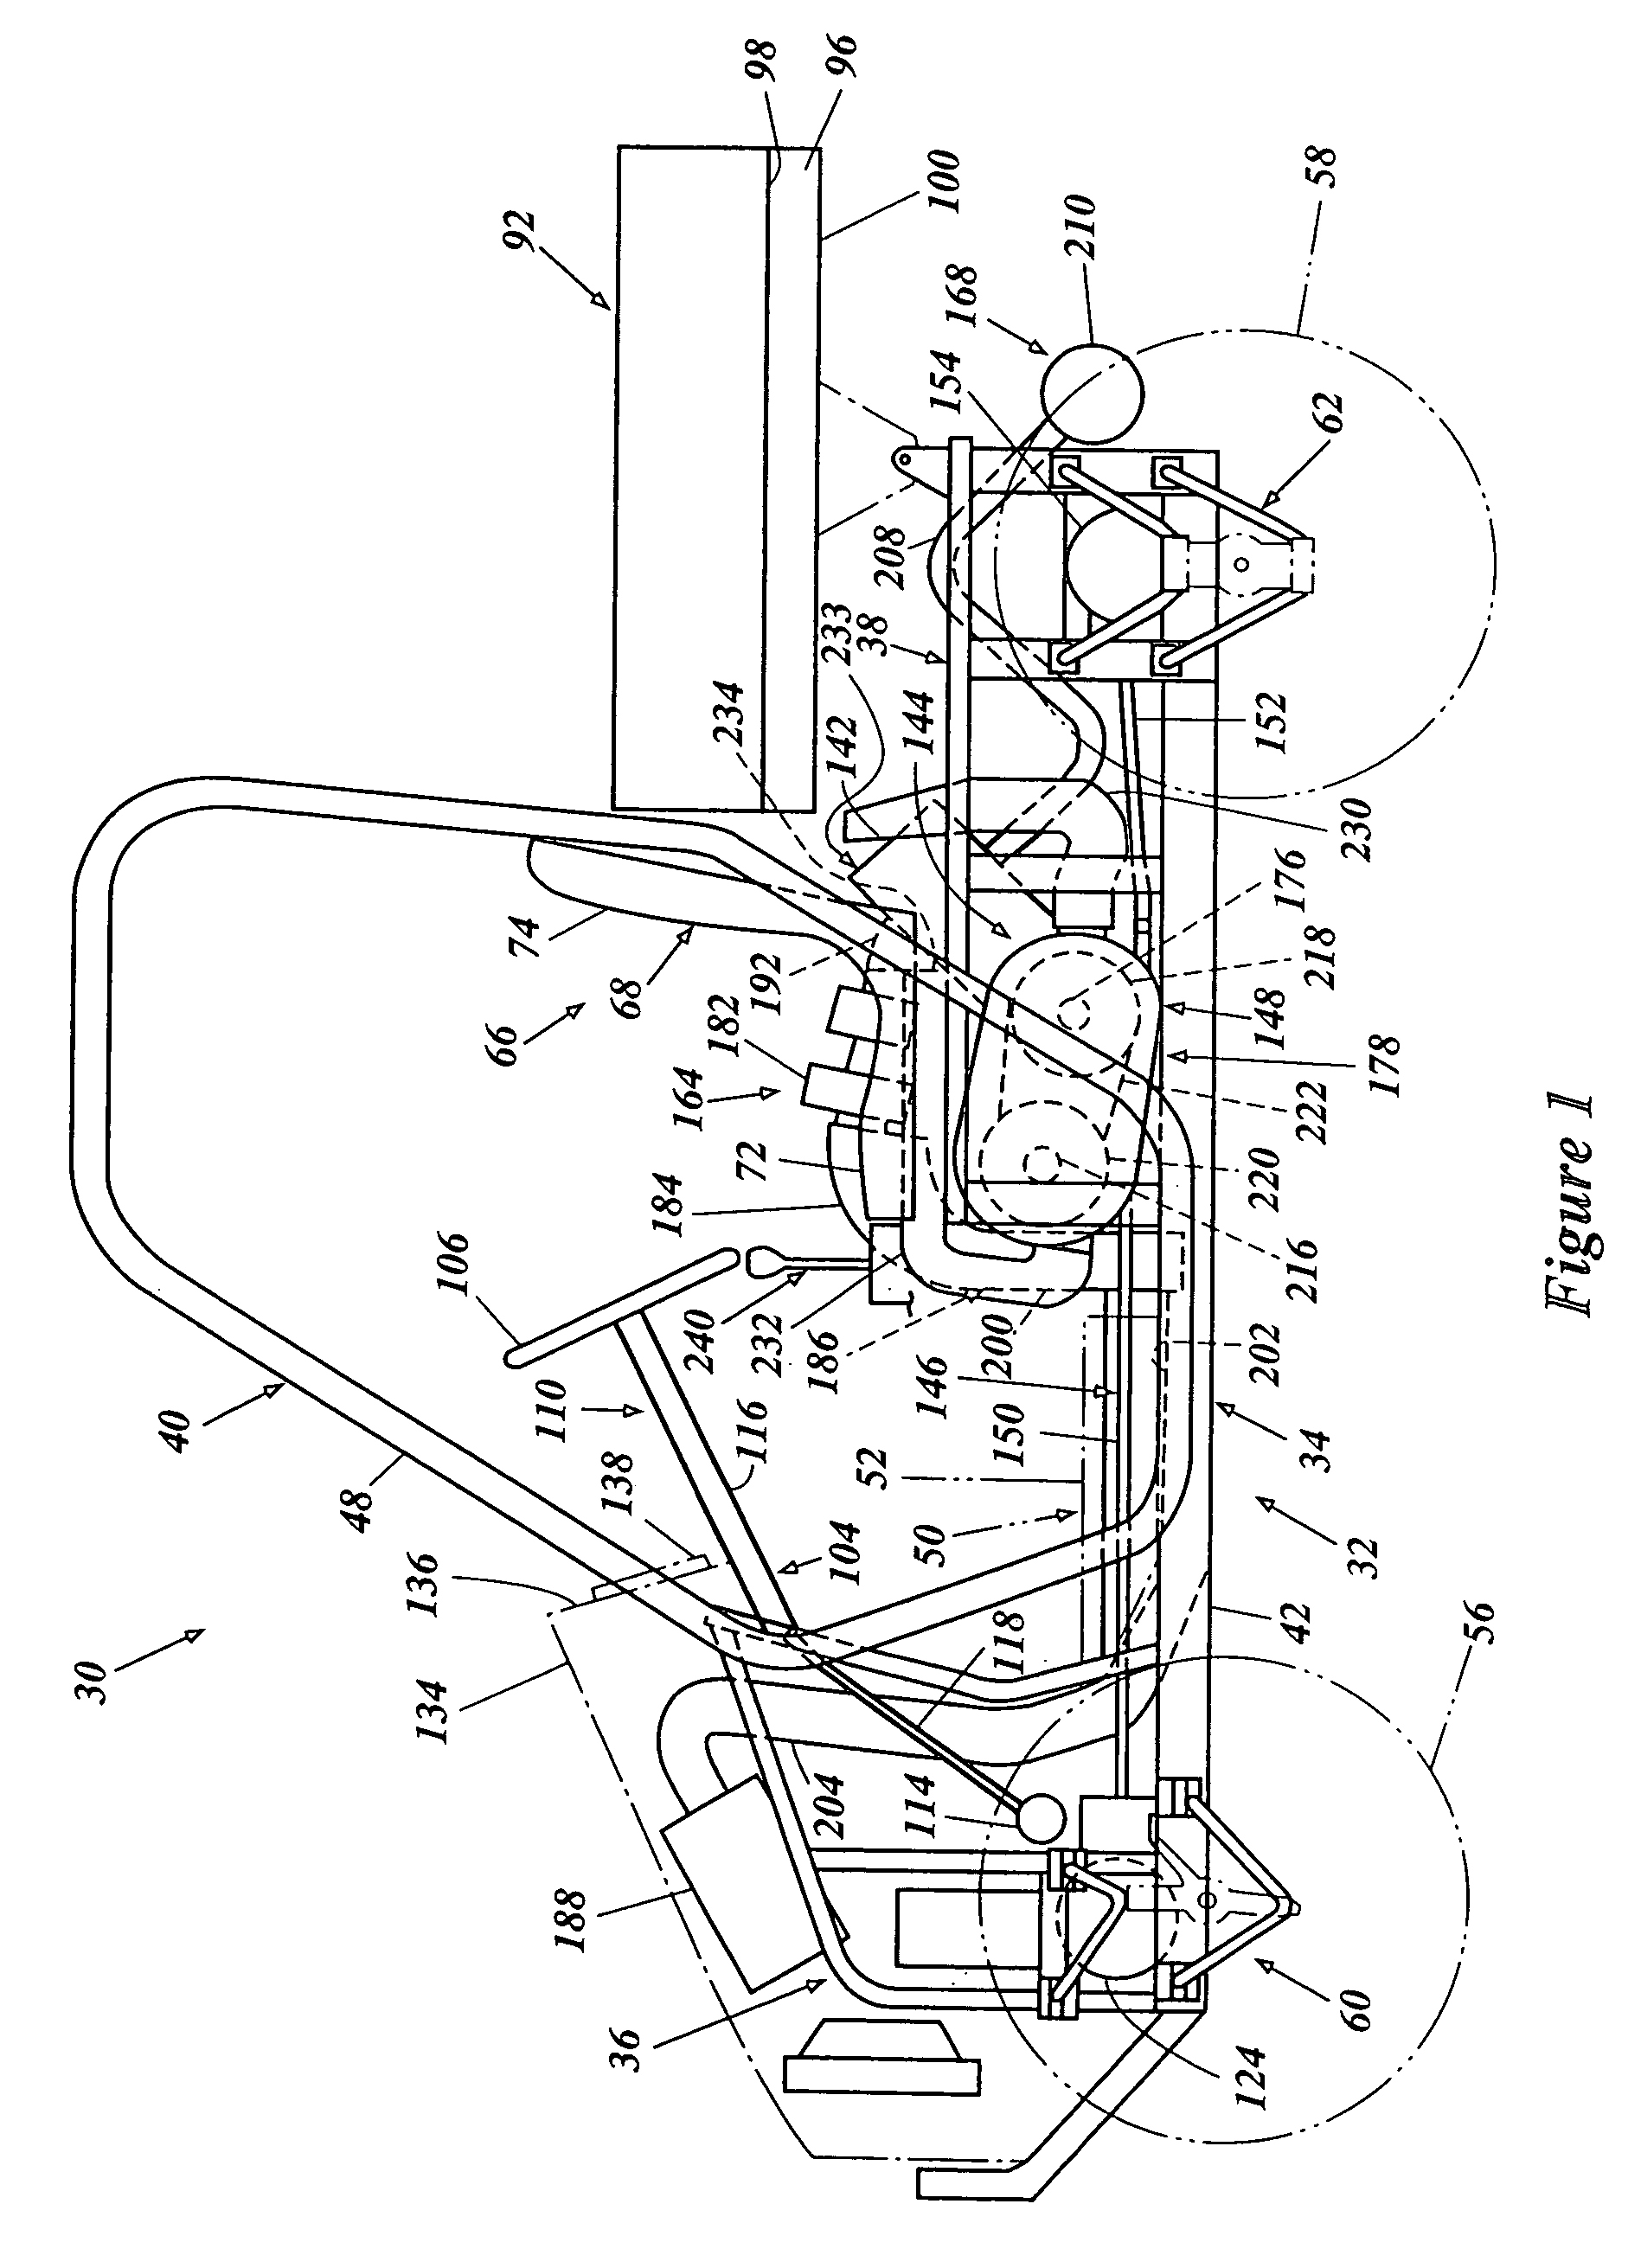 Engine arrangement for off-road vehicle